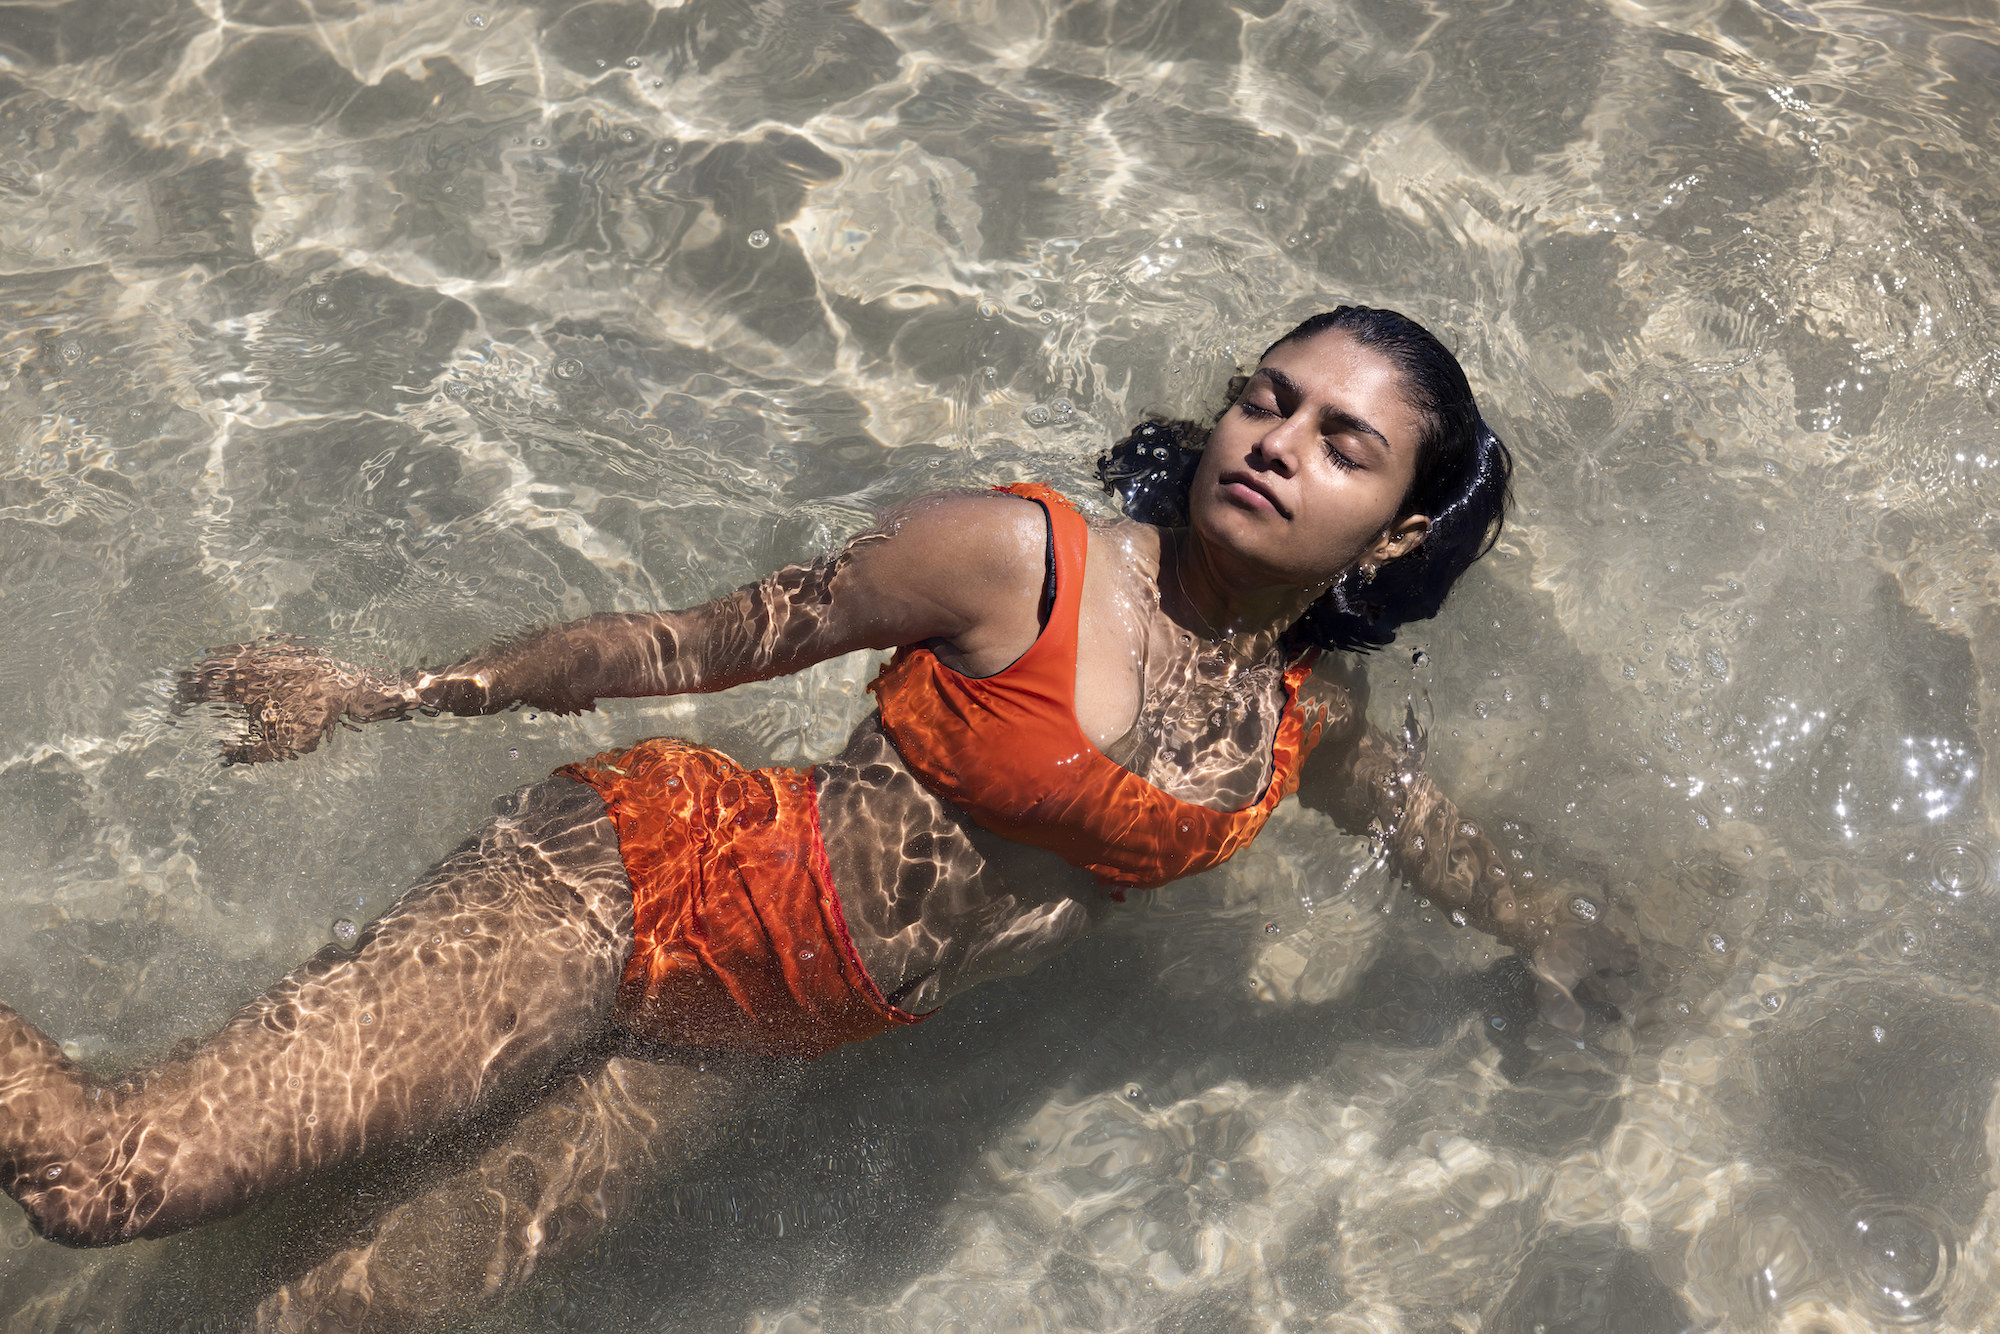 A model swimming in the ocean while wearing the period friendly bikini